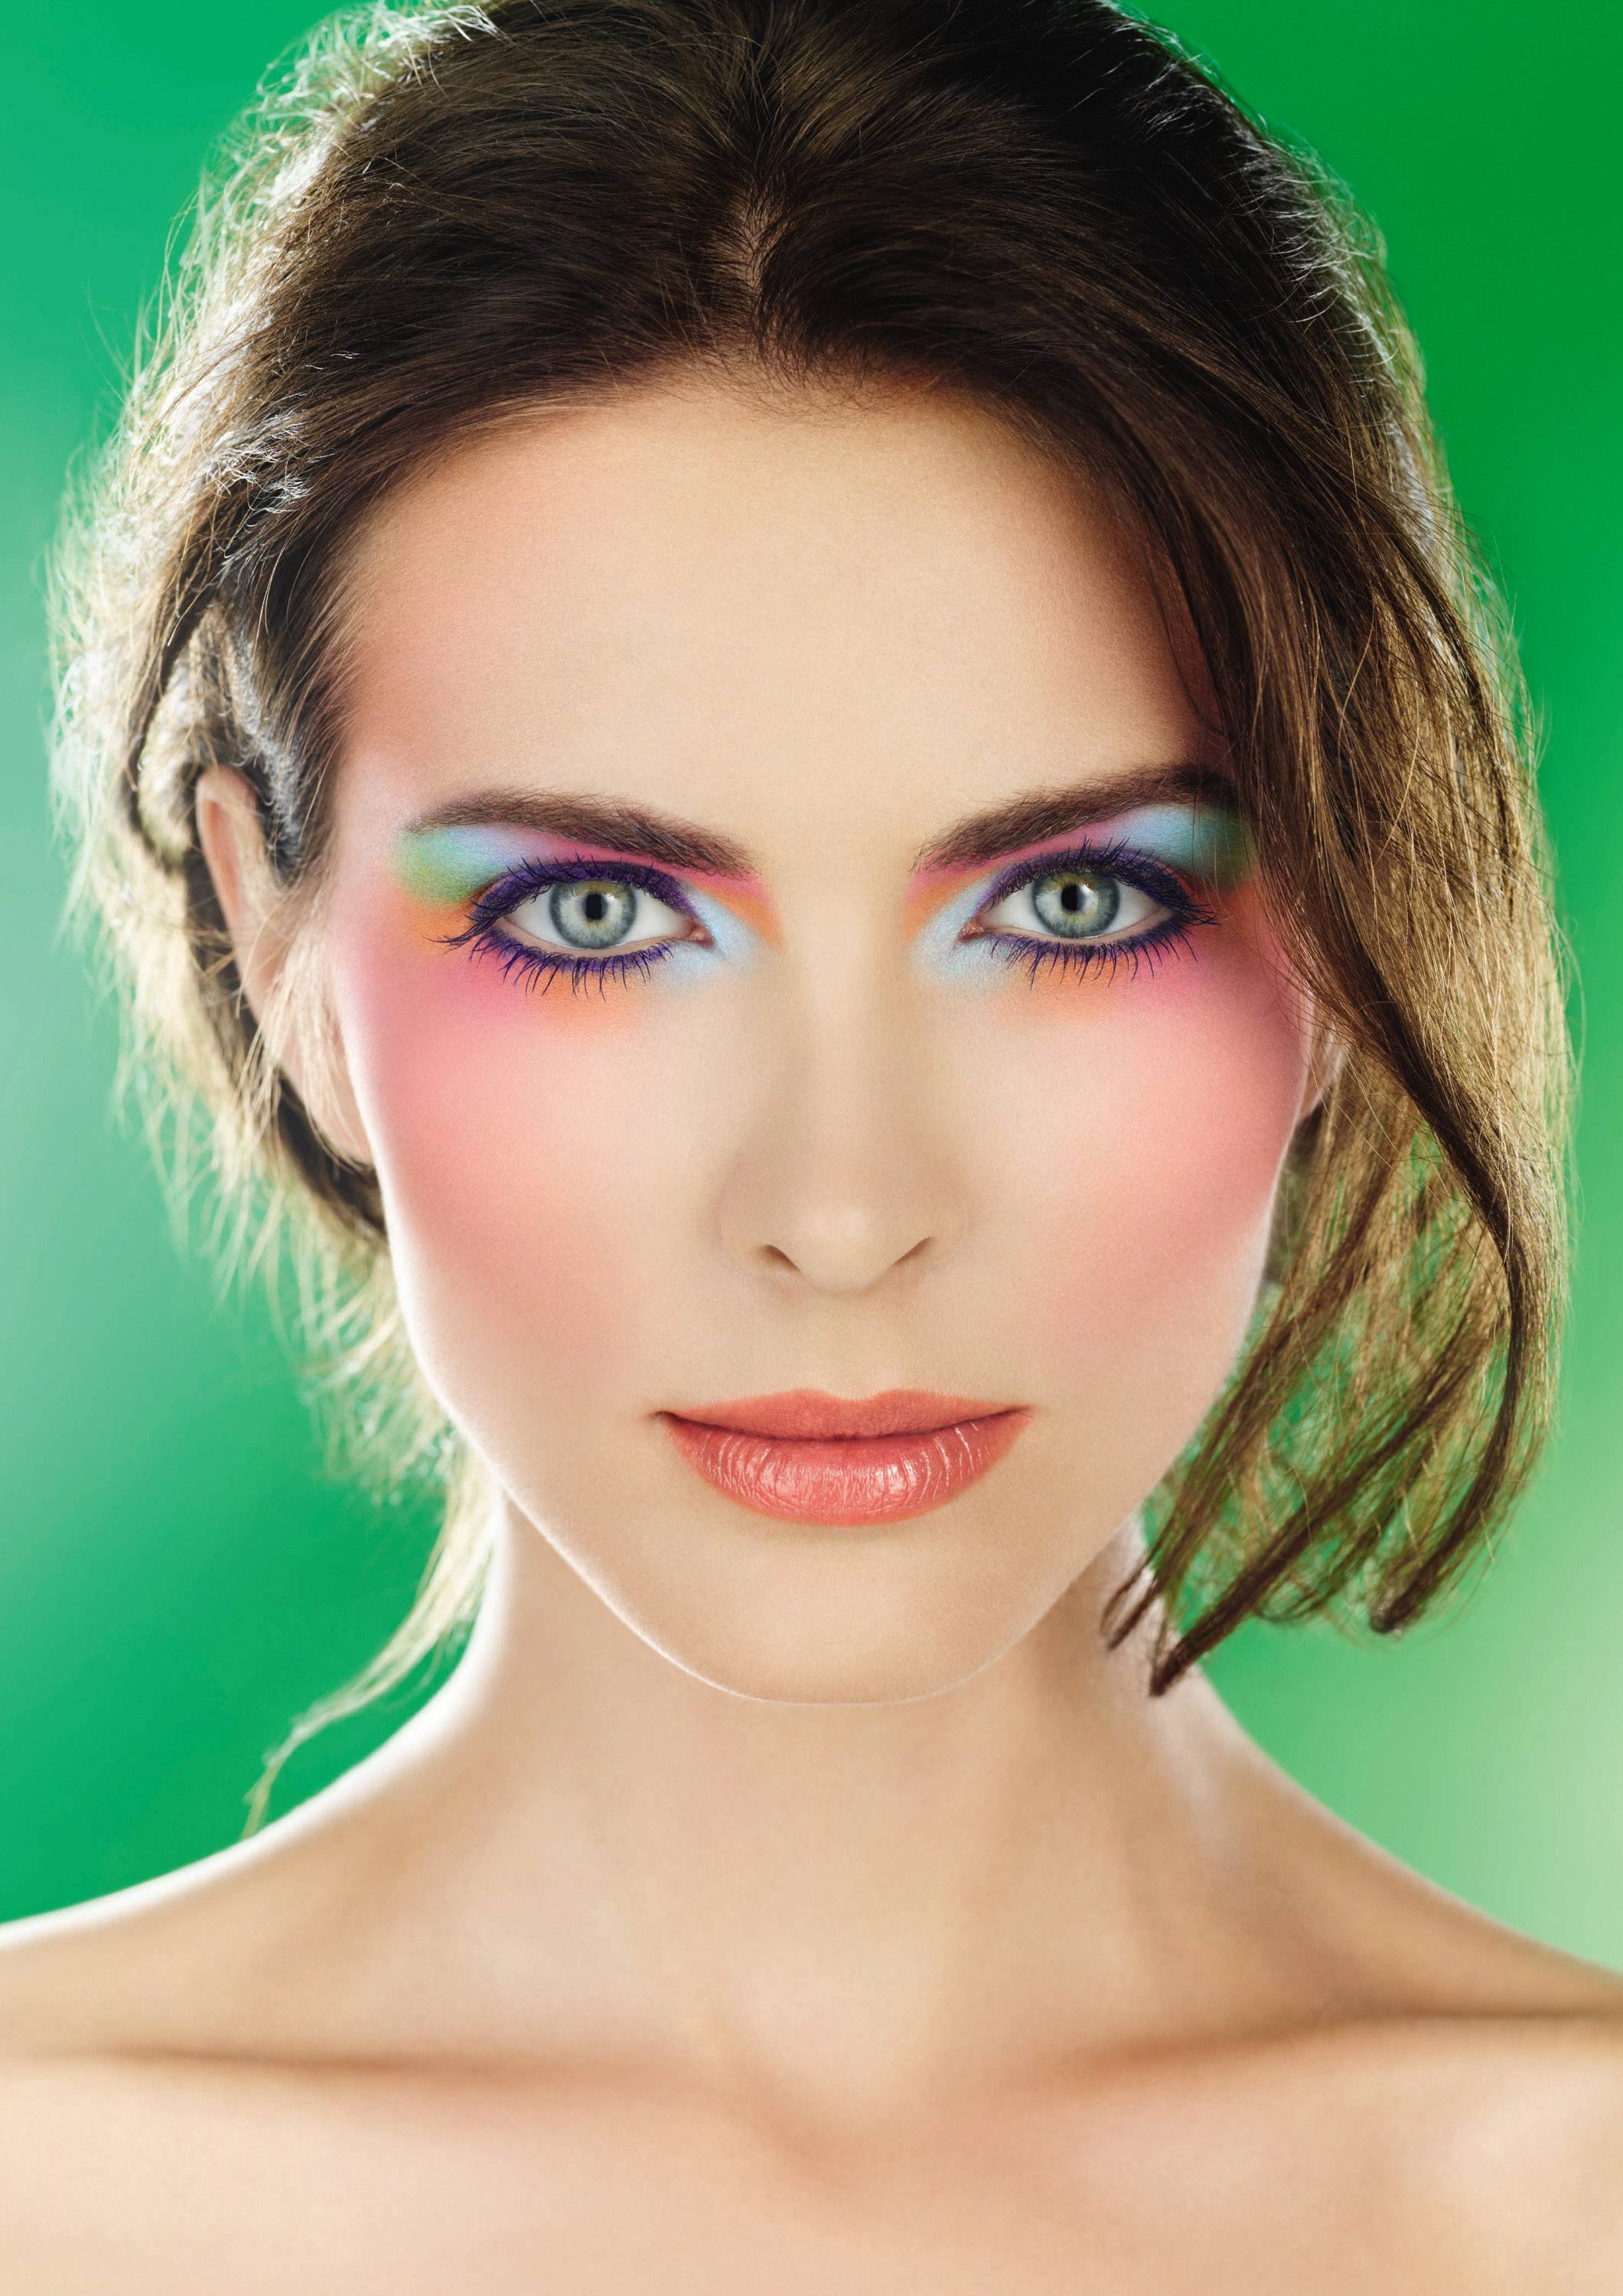 Makeup Artist Essentials - Bridal, Red Carpet & Fashion - Elite Make Up Academy